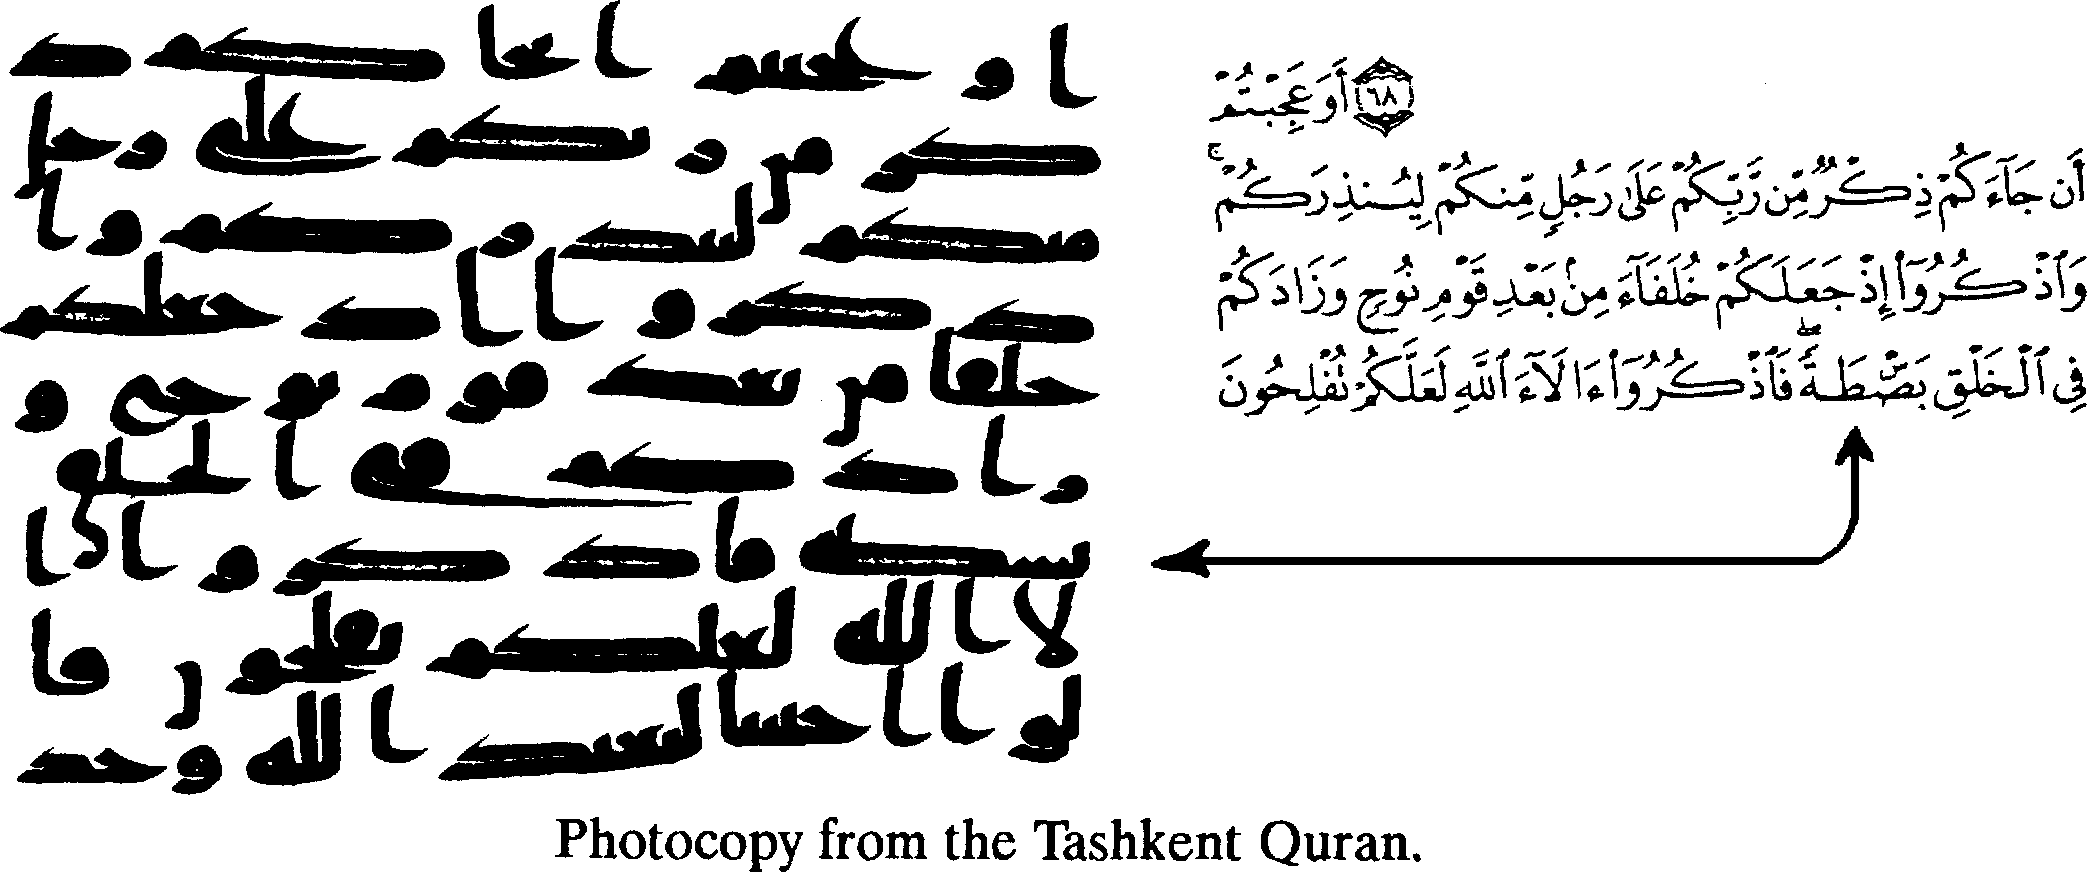 Photocopy from the Tashkent Quran